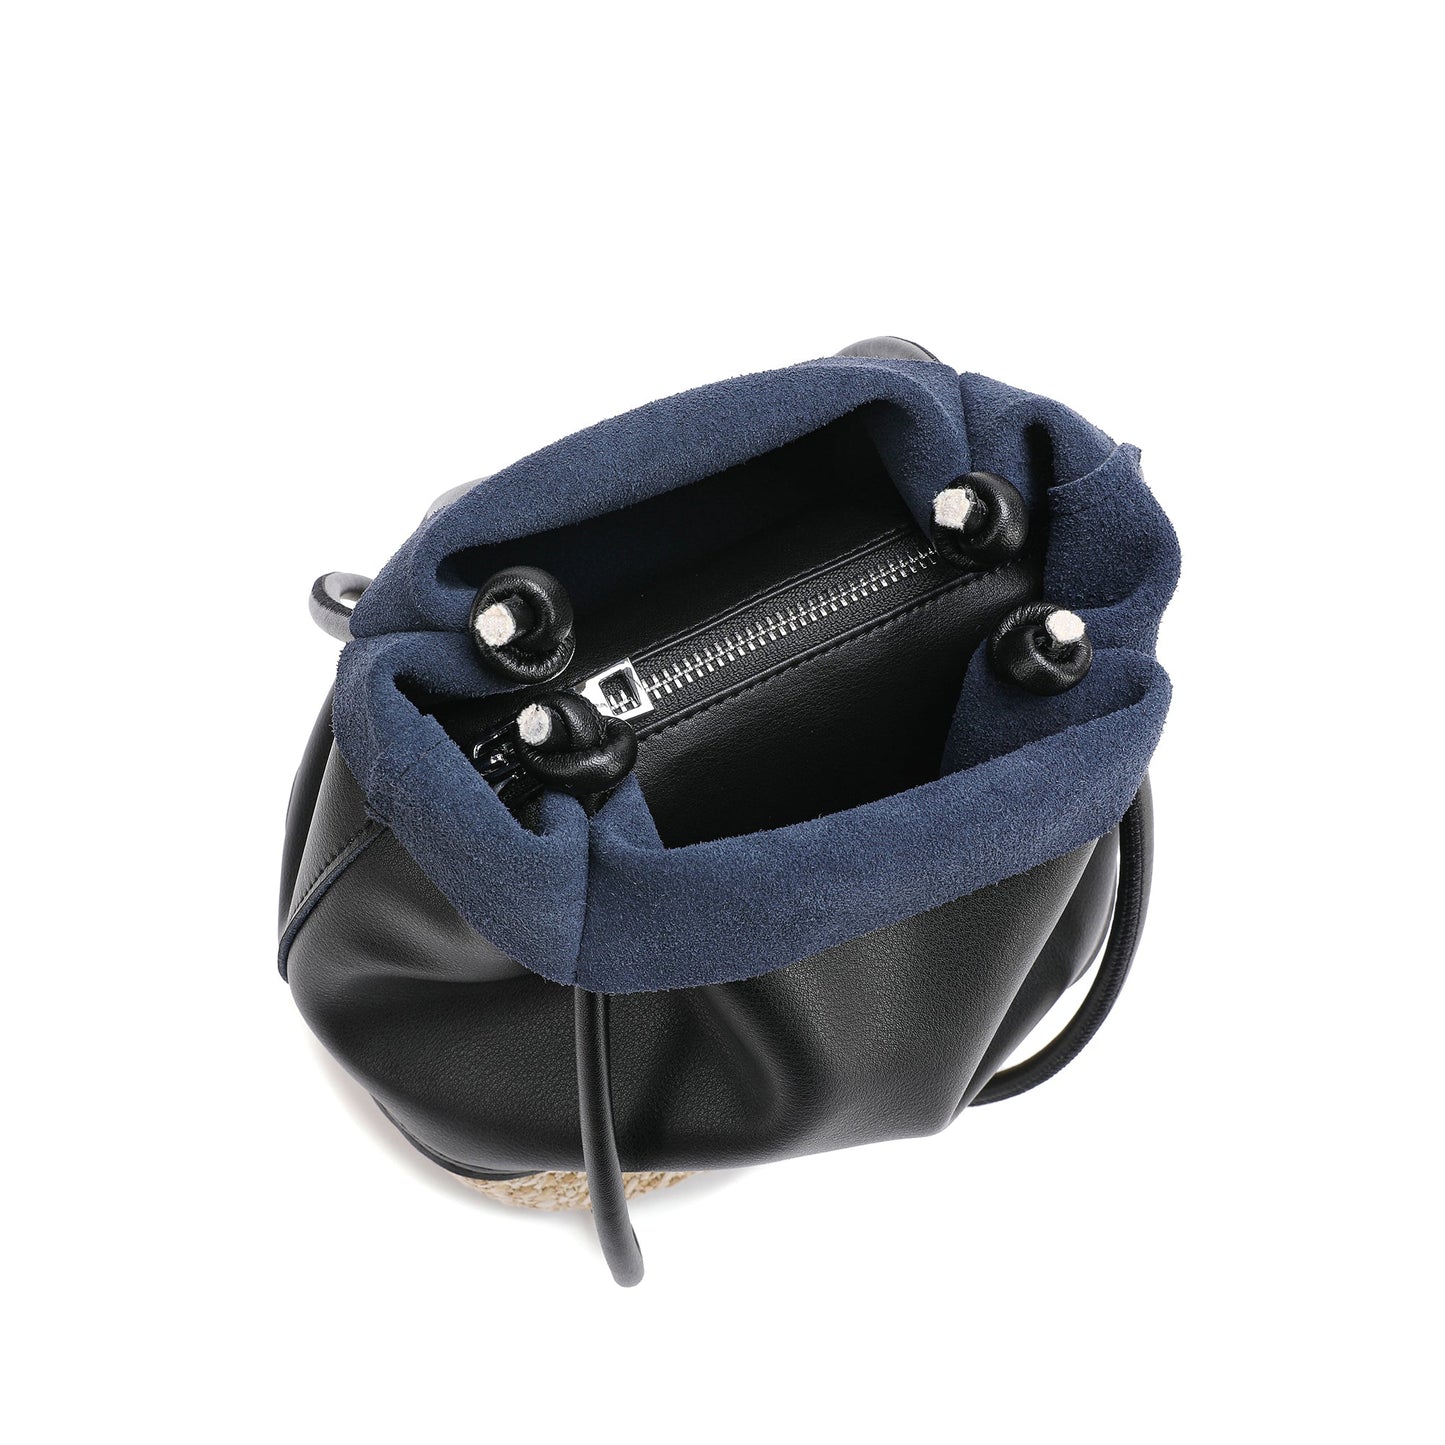 Full-Grain Soft Leather Hobo/Shoulder Bag